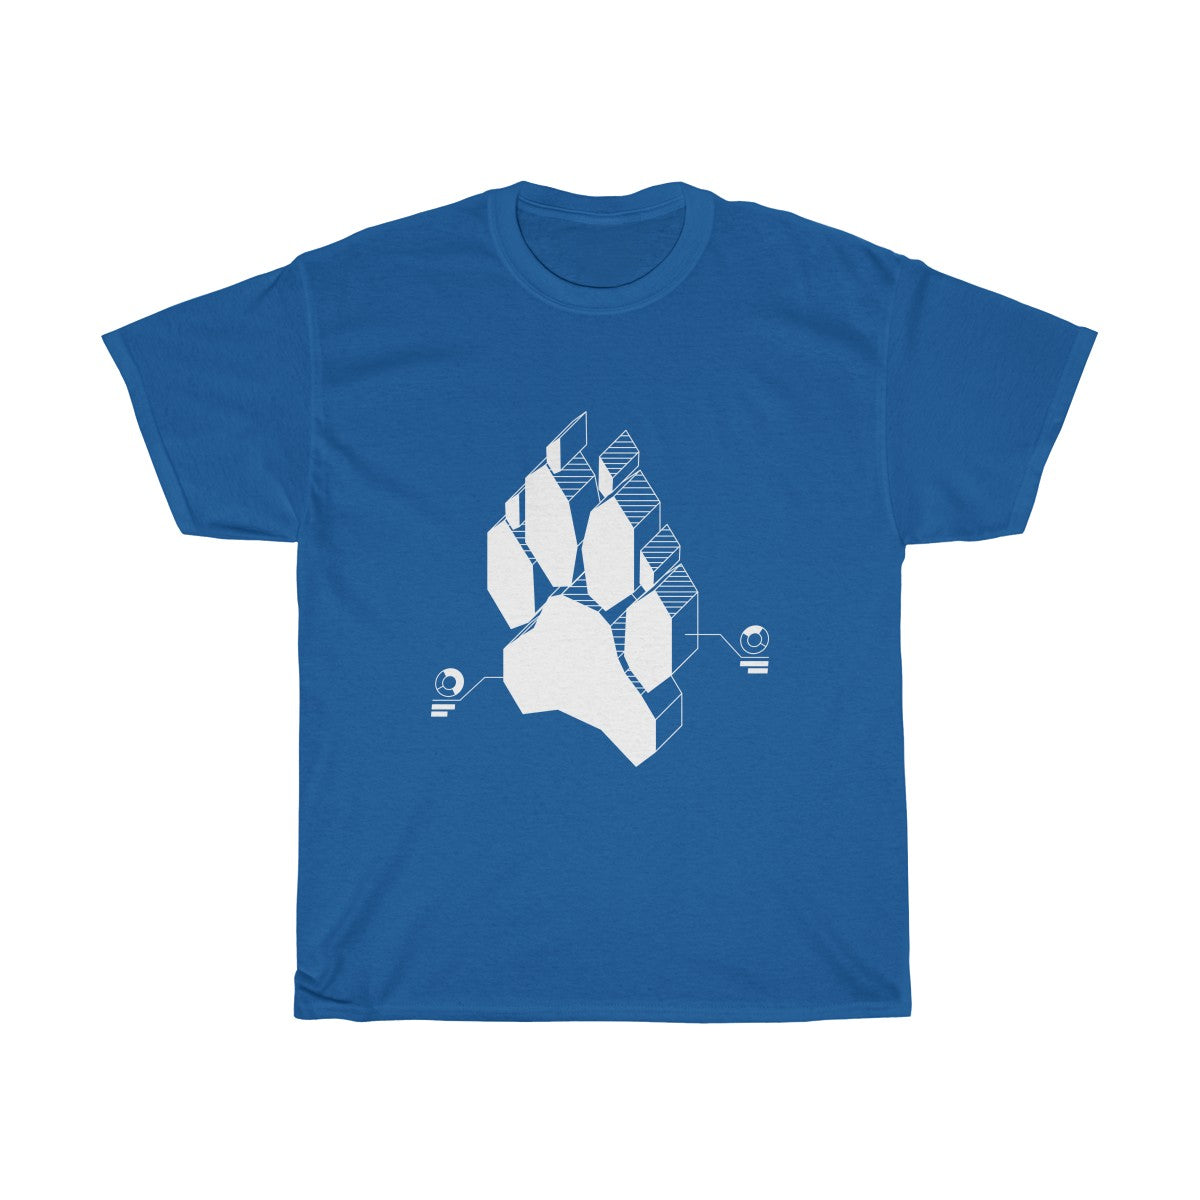 Techno Canine - T-Shirt T-Shirt Wexon Royal Blue S 